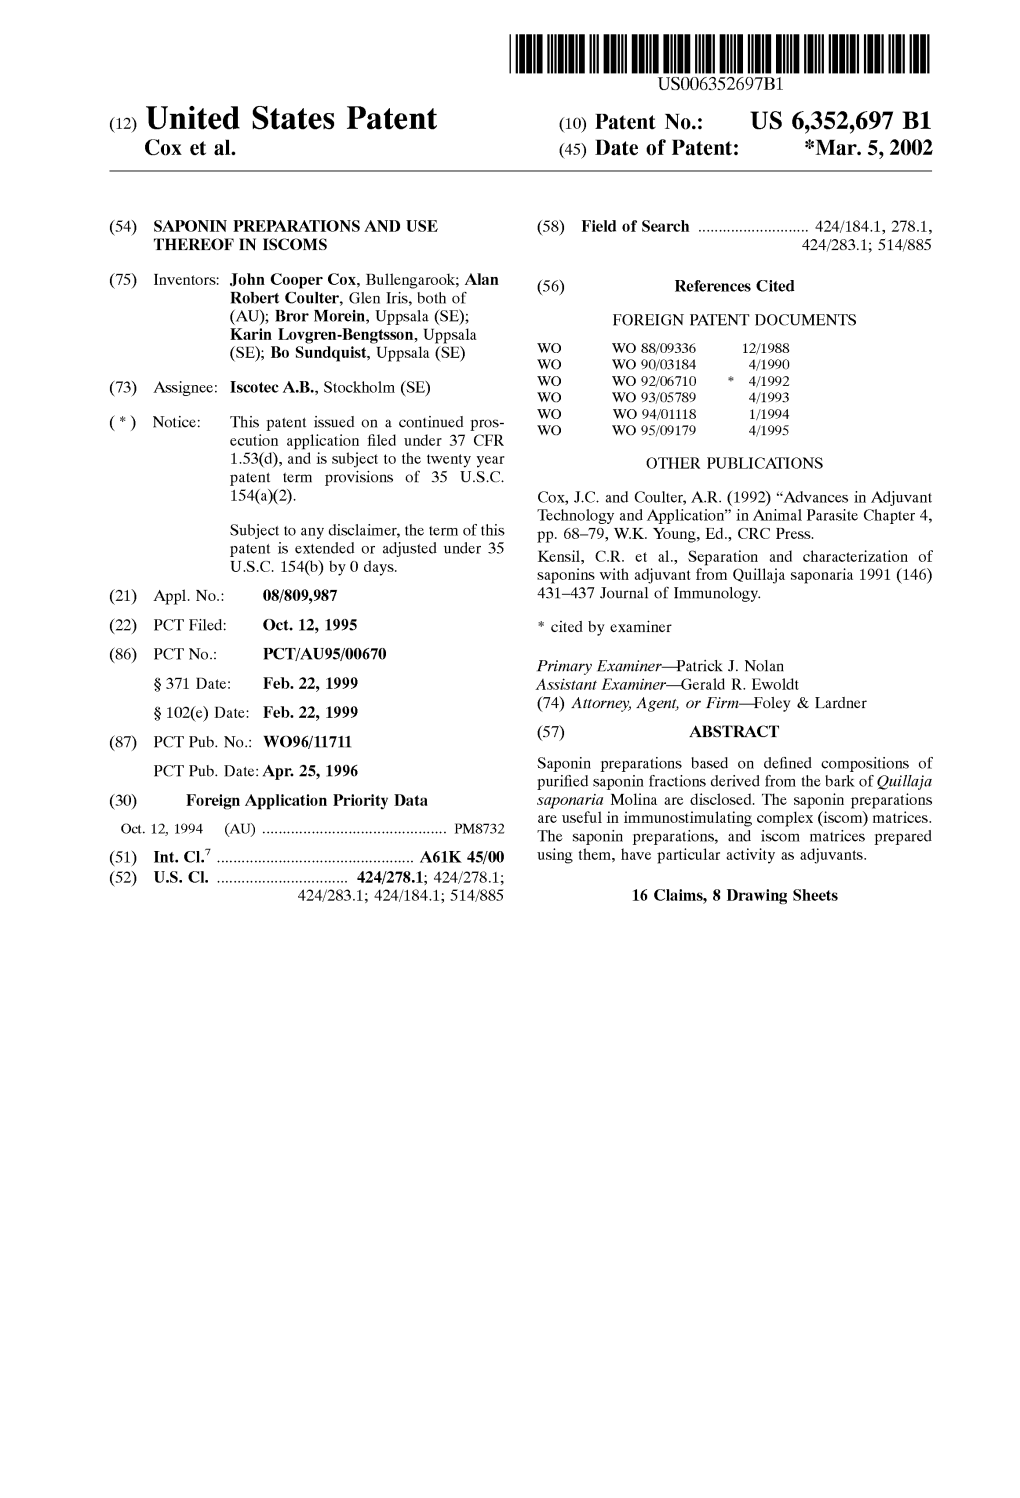 (12) United States Patent (10) Patent No.: US 6,352,697 B1 Cox Et Al